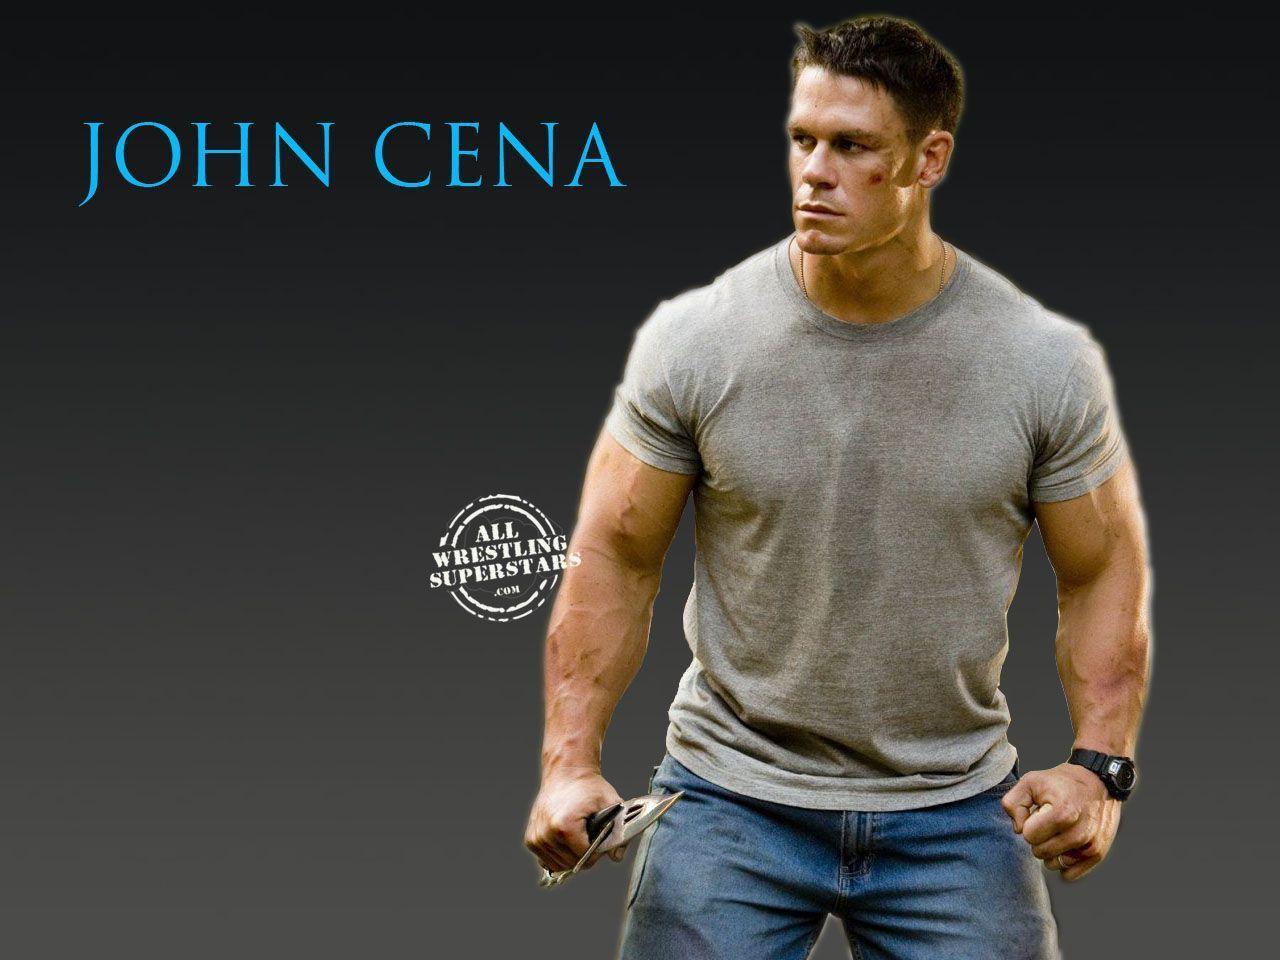 Free Download John Cena 2012 Wallpapers HQ 480P